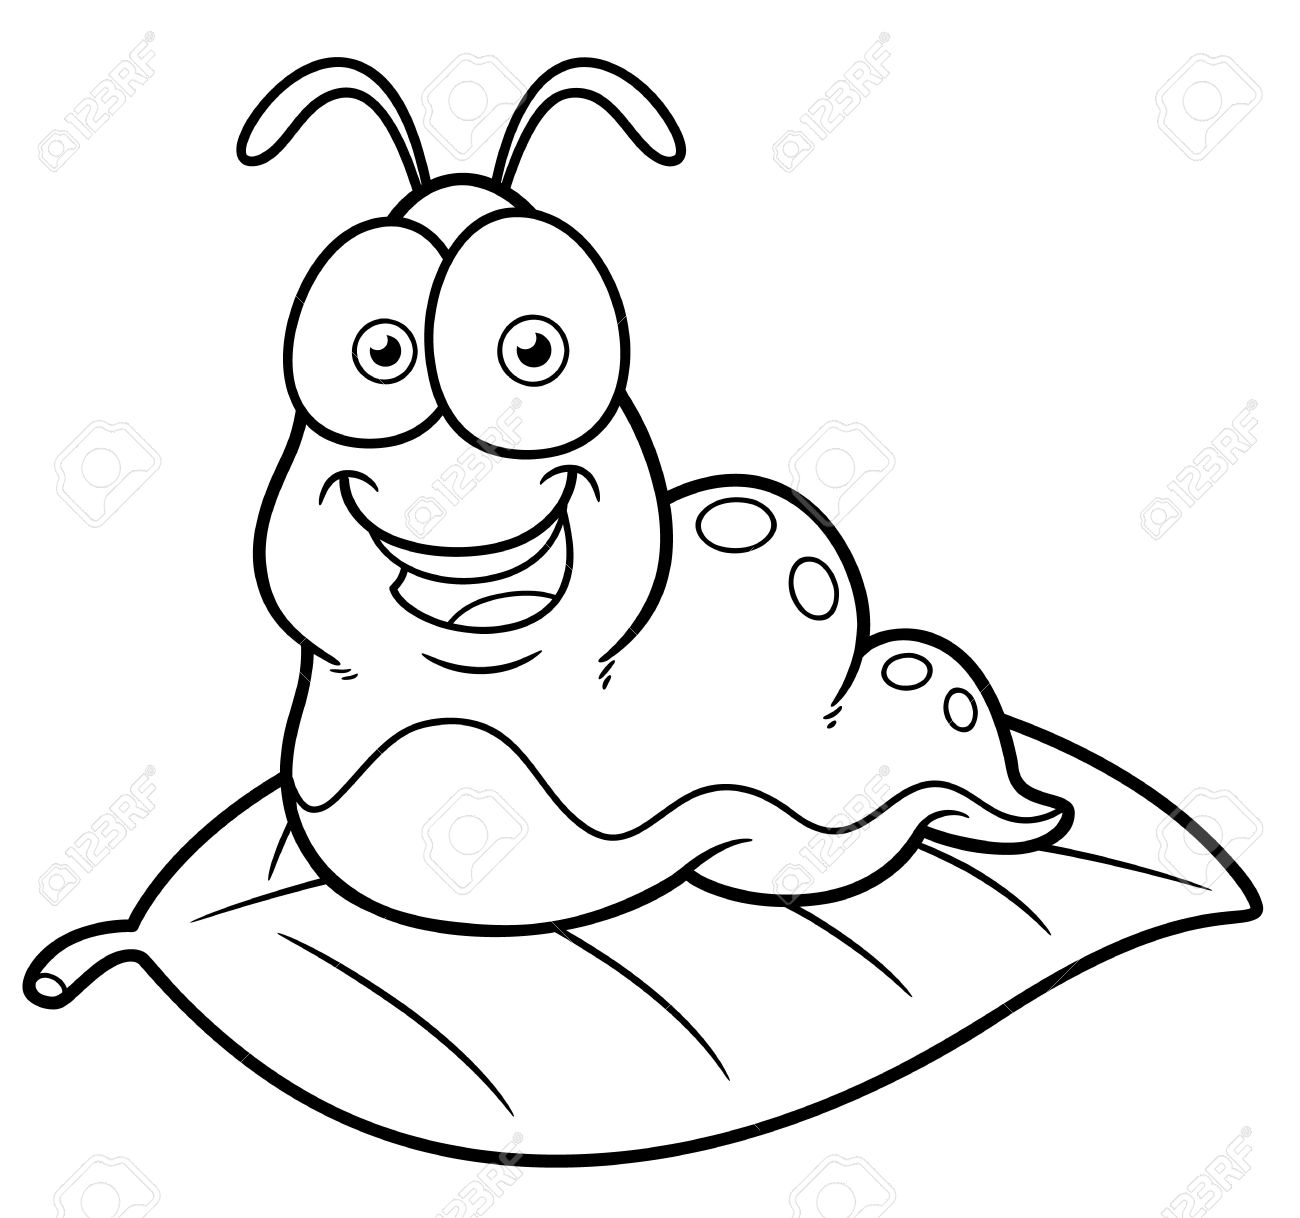 Illustration of cartoon worm